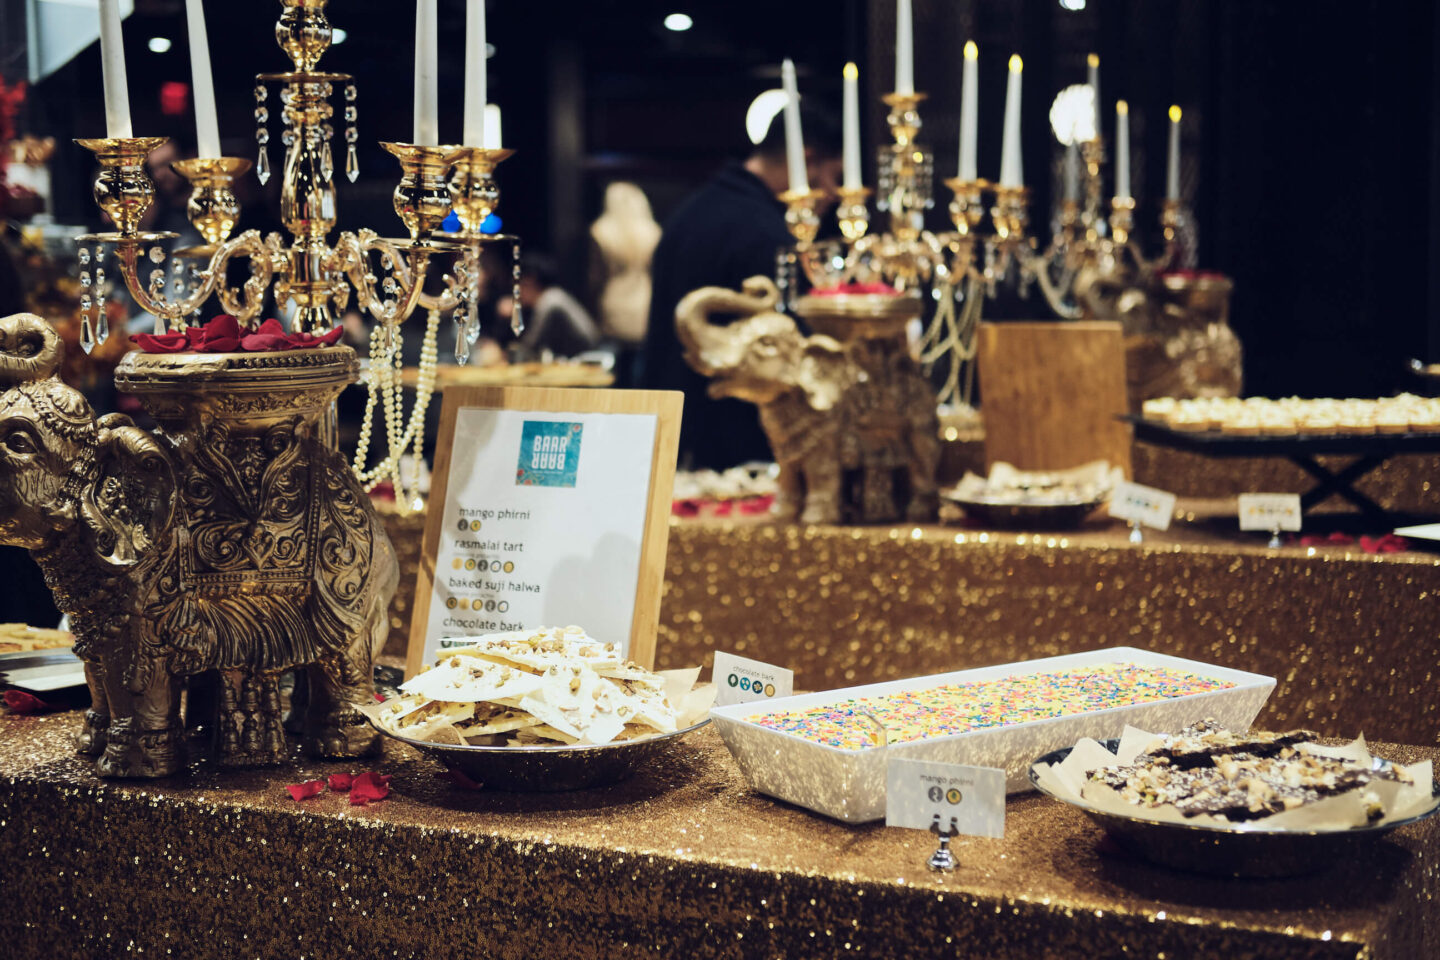 LinkedIn's Diwali Celebration - Empire State Building - Event Photography - Lifestyle Photography